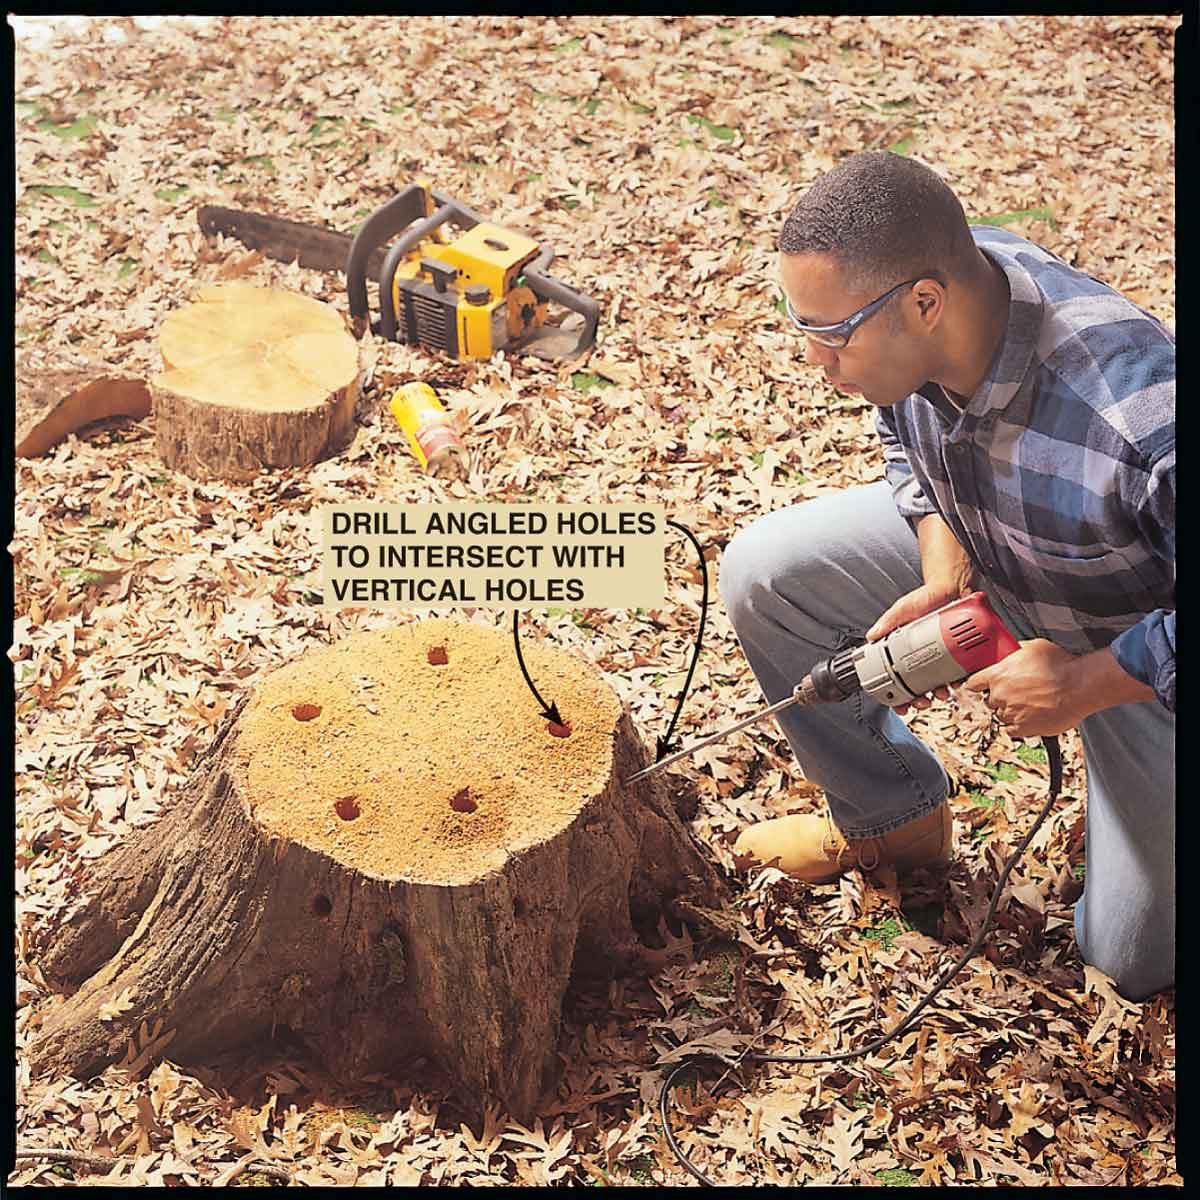 How to Kill a Tree Stump 4 Different Ways